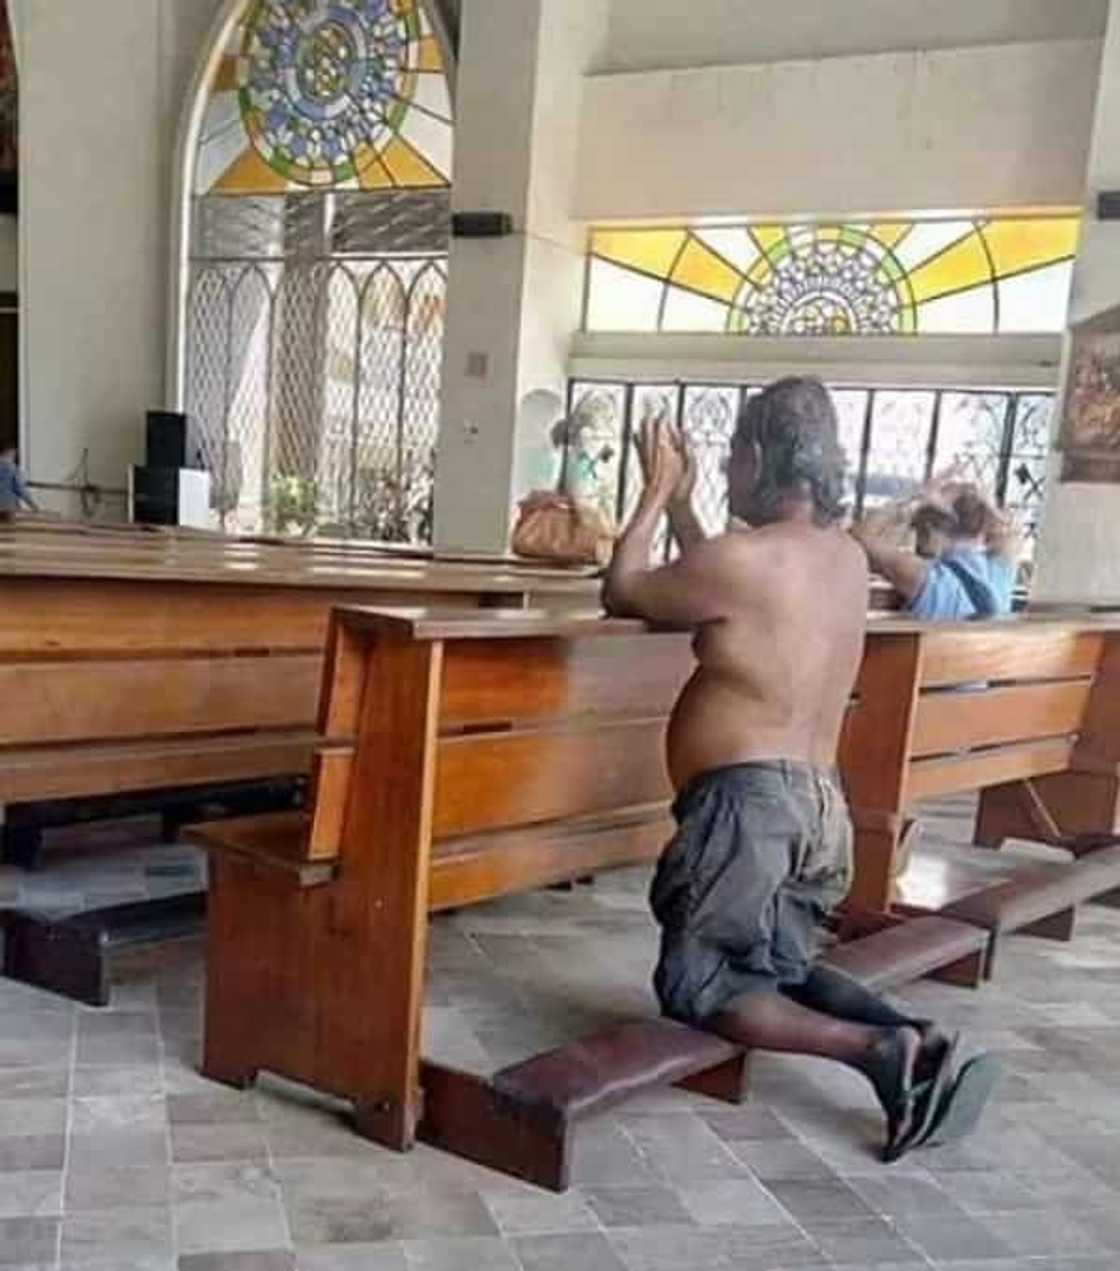 Praying beggar goes viral for his extraordinary faith